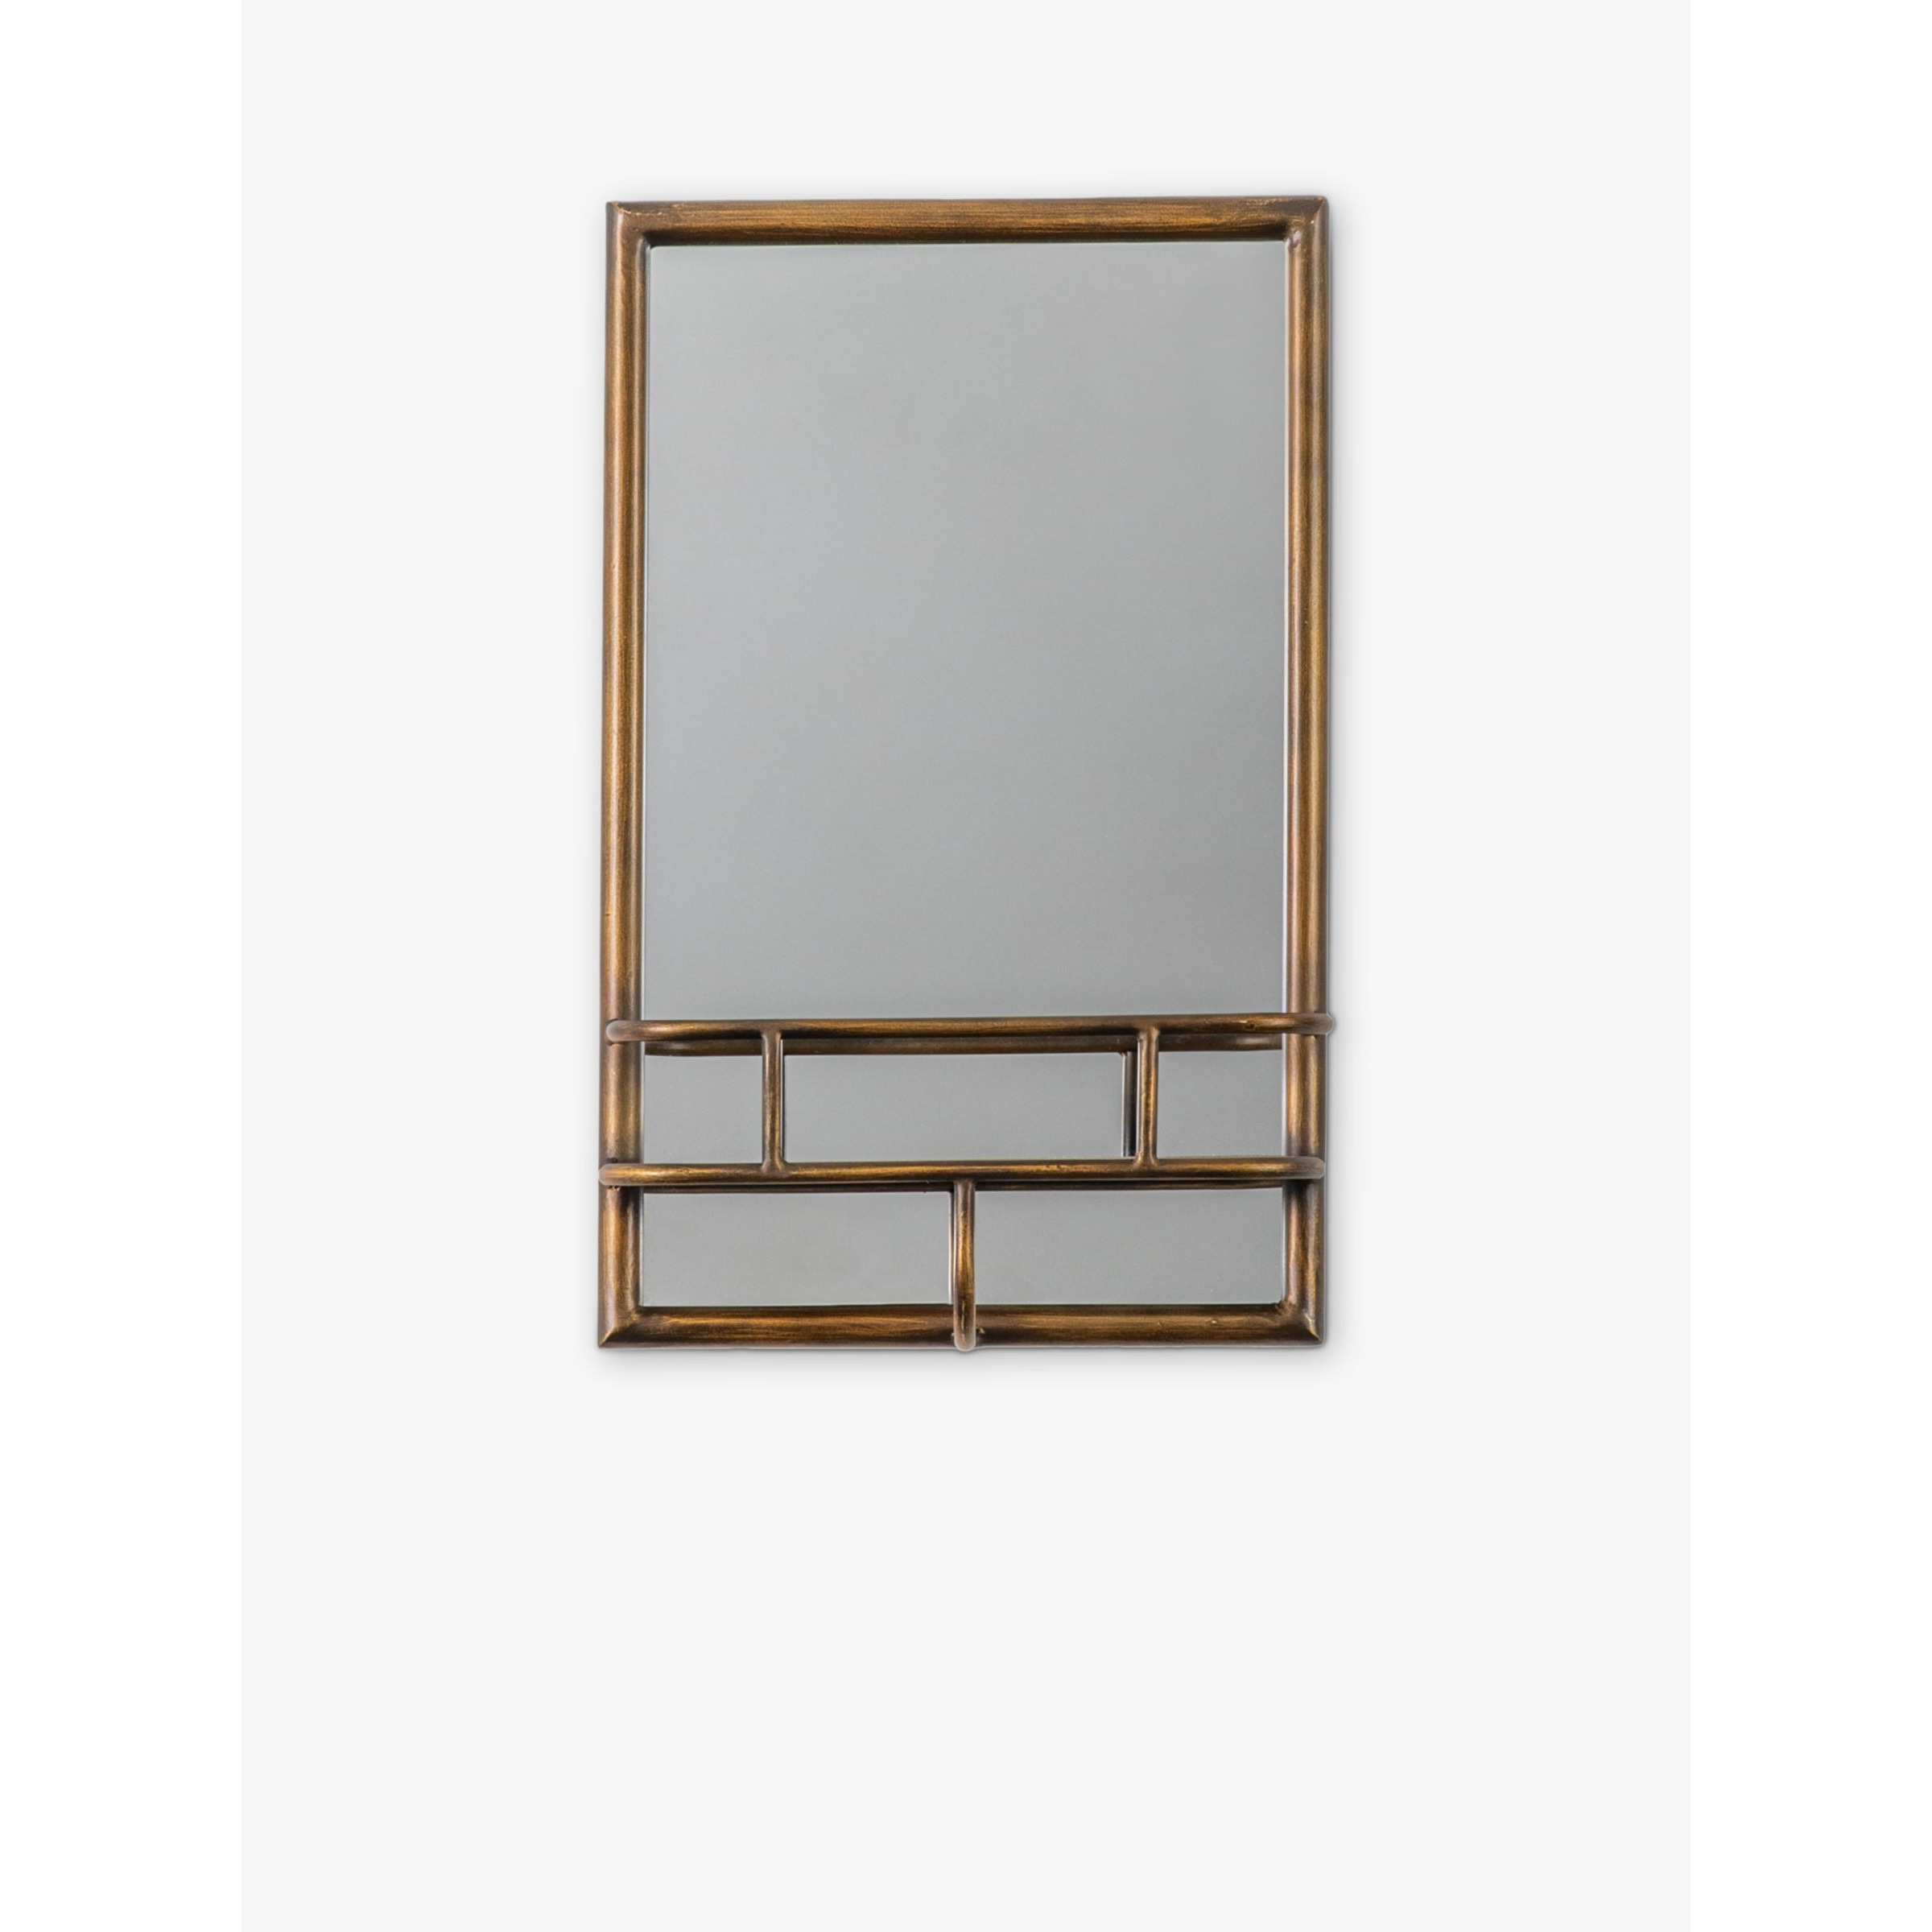 Gallery Direct Milton Rectangular Metal Wall Mirror & Shelf, 48 x 30cm - image 1